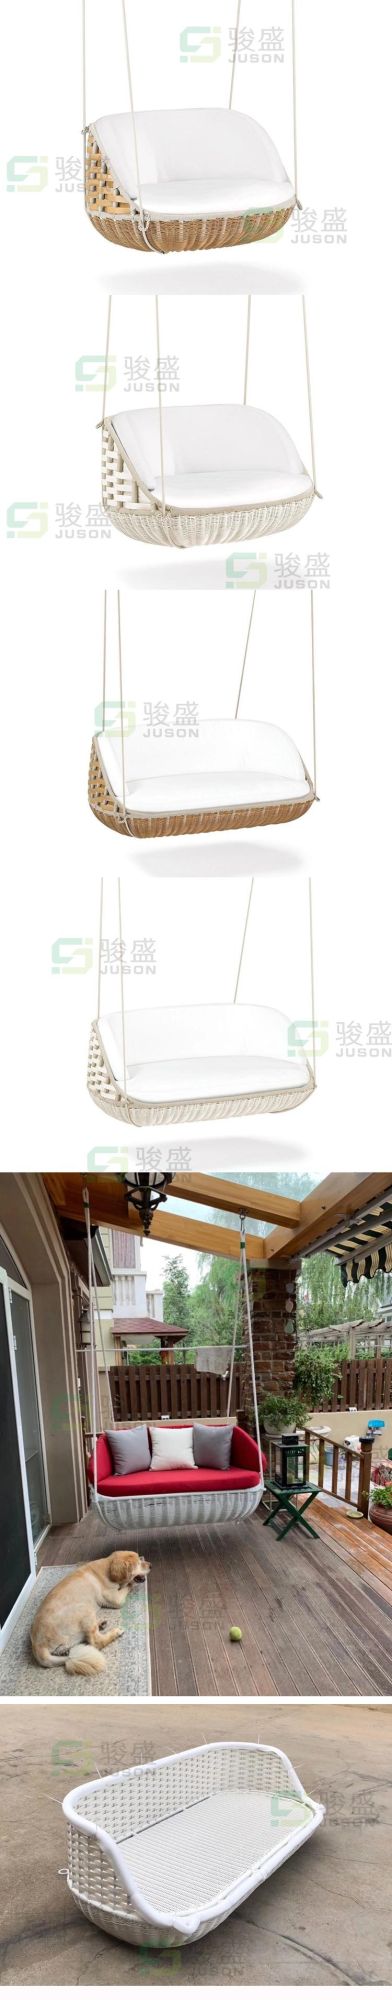 Hotel Furniture Modern Outdoor Hanging Chair Rattan Patio Chair Leisure Chair Garden Swing